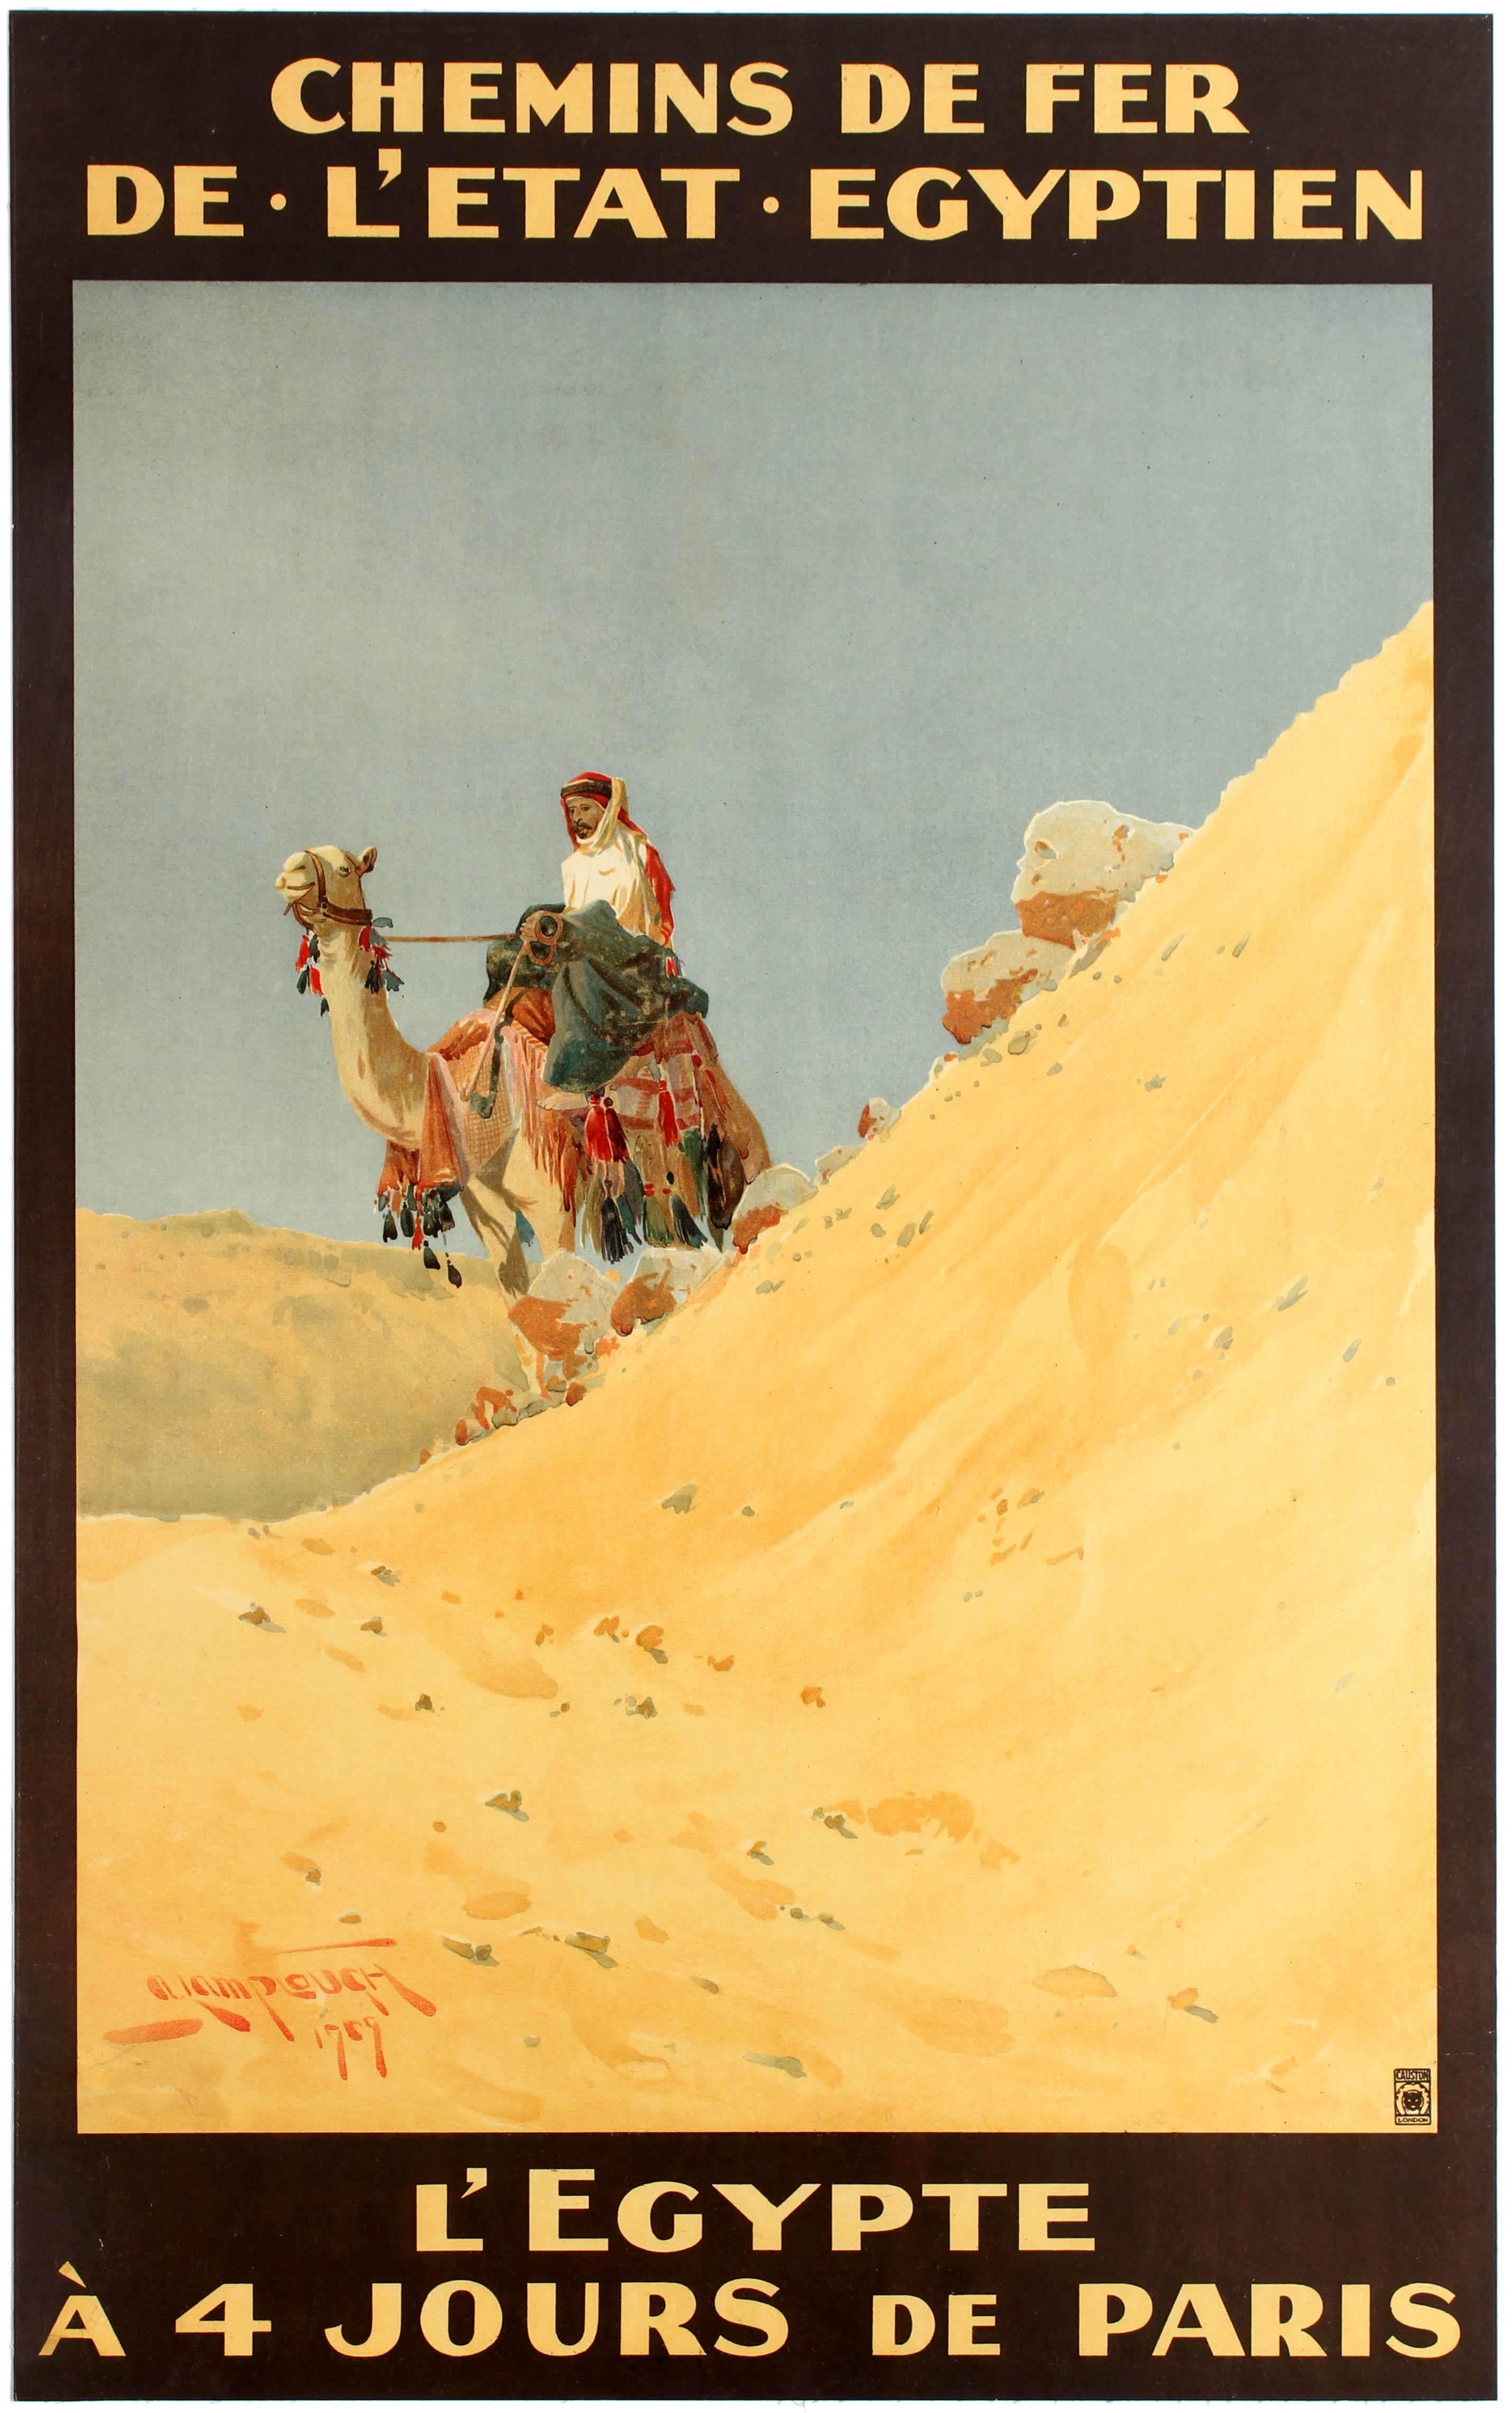 Augustus Osborne Lamplough Print - Original Antique Railway Travel Poster Egypt 4 Days Paris Chemins De Fer Egypte